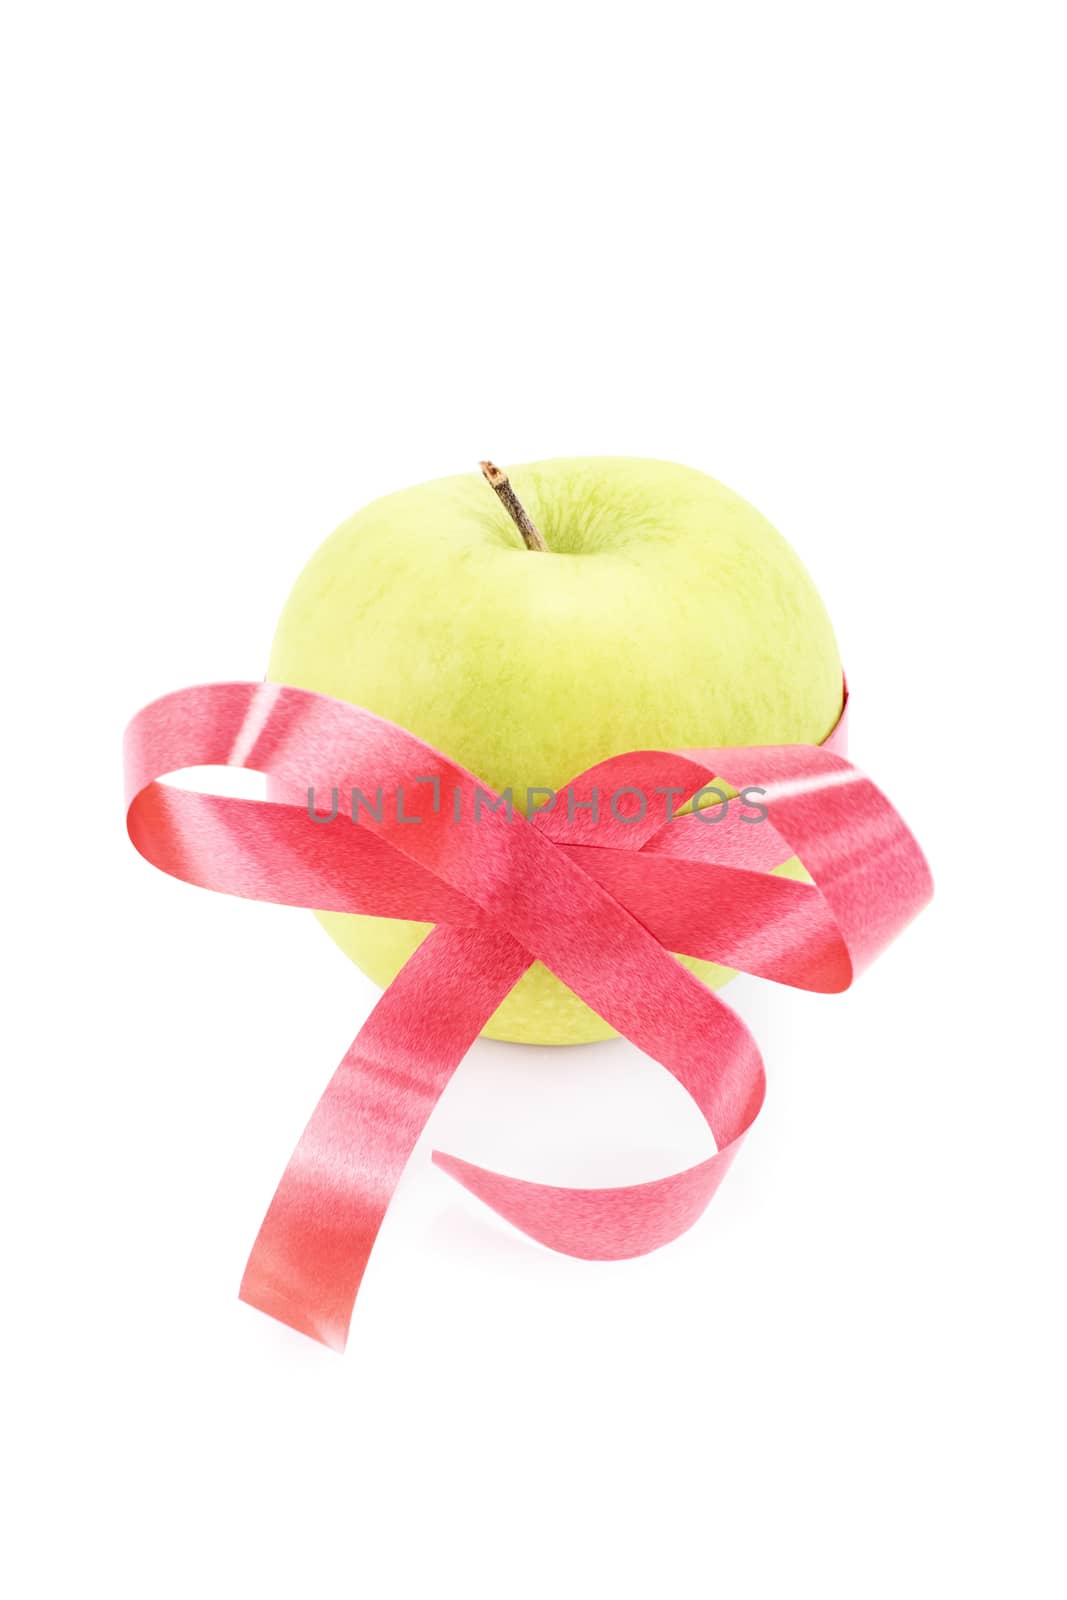 Apple gift by Mendelex